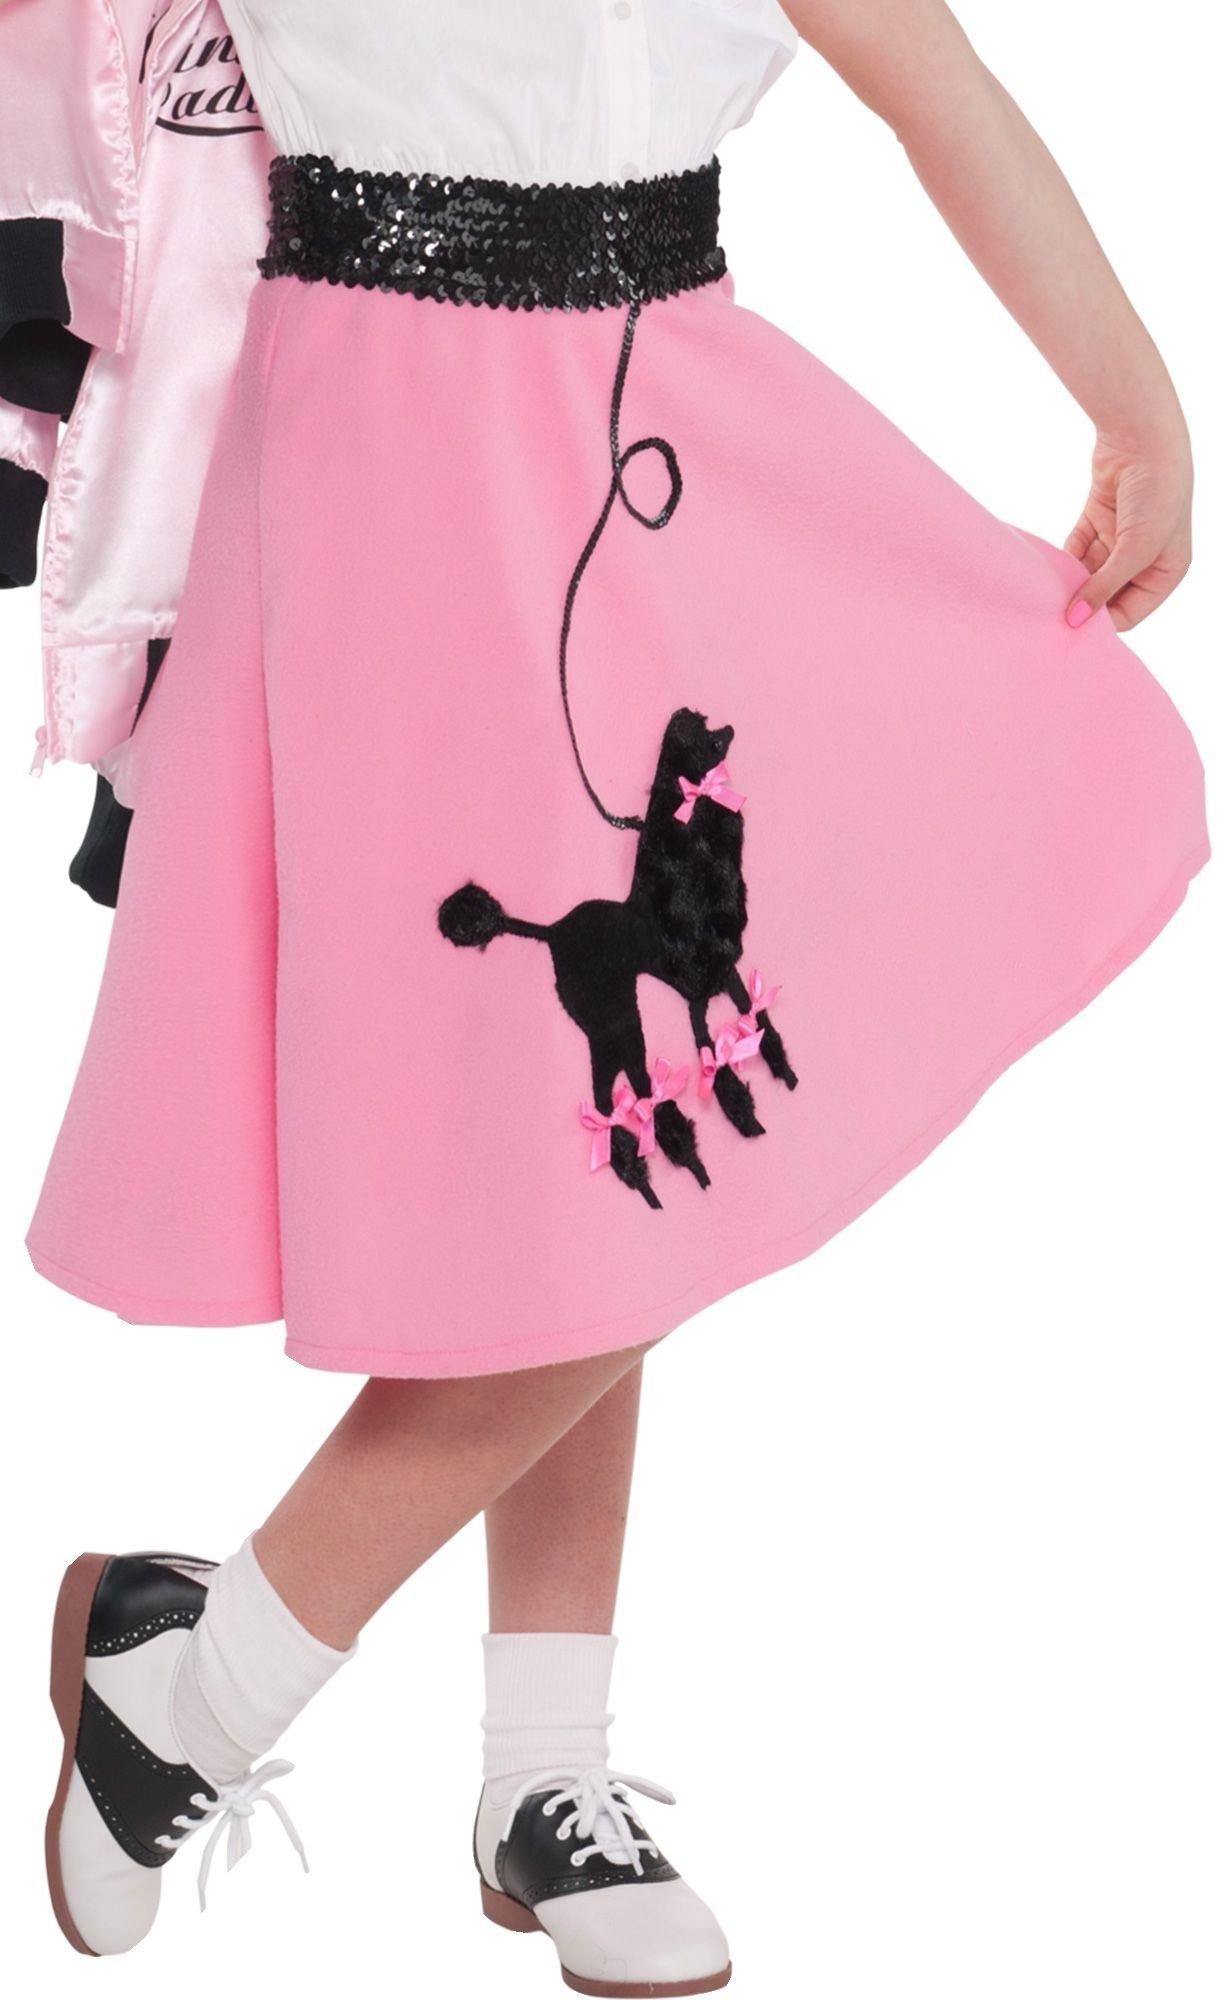 Skirt - Pink - Ladies